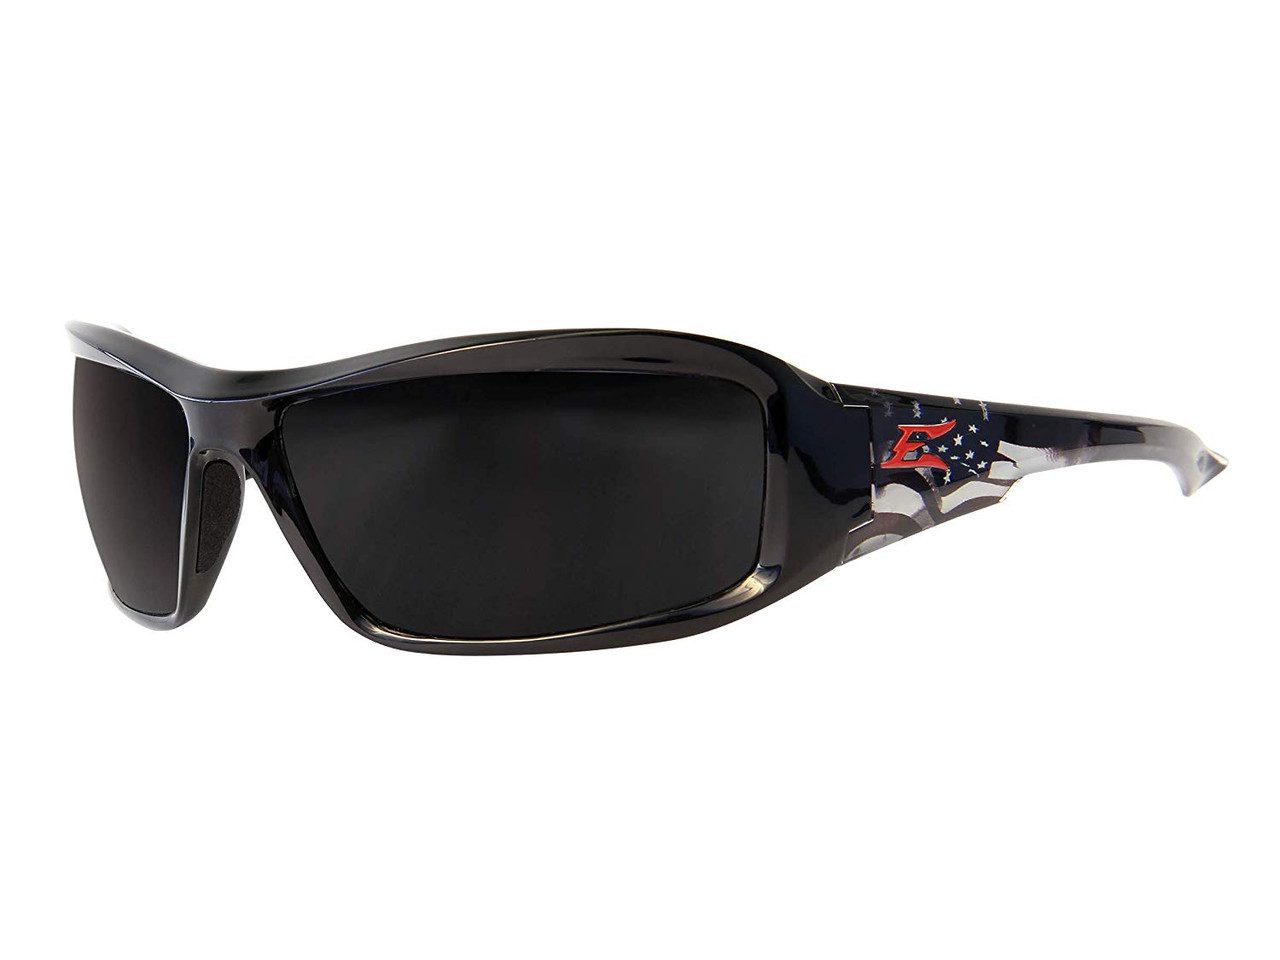 Edge Dakura Safety Glasses Sunglasses Camo Frame Smoke Lens ANSI Z87 